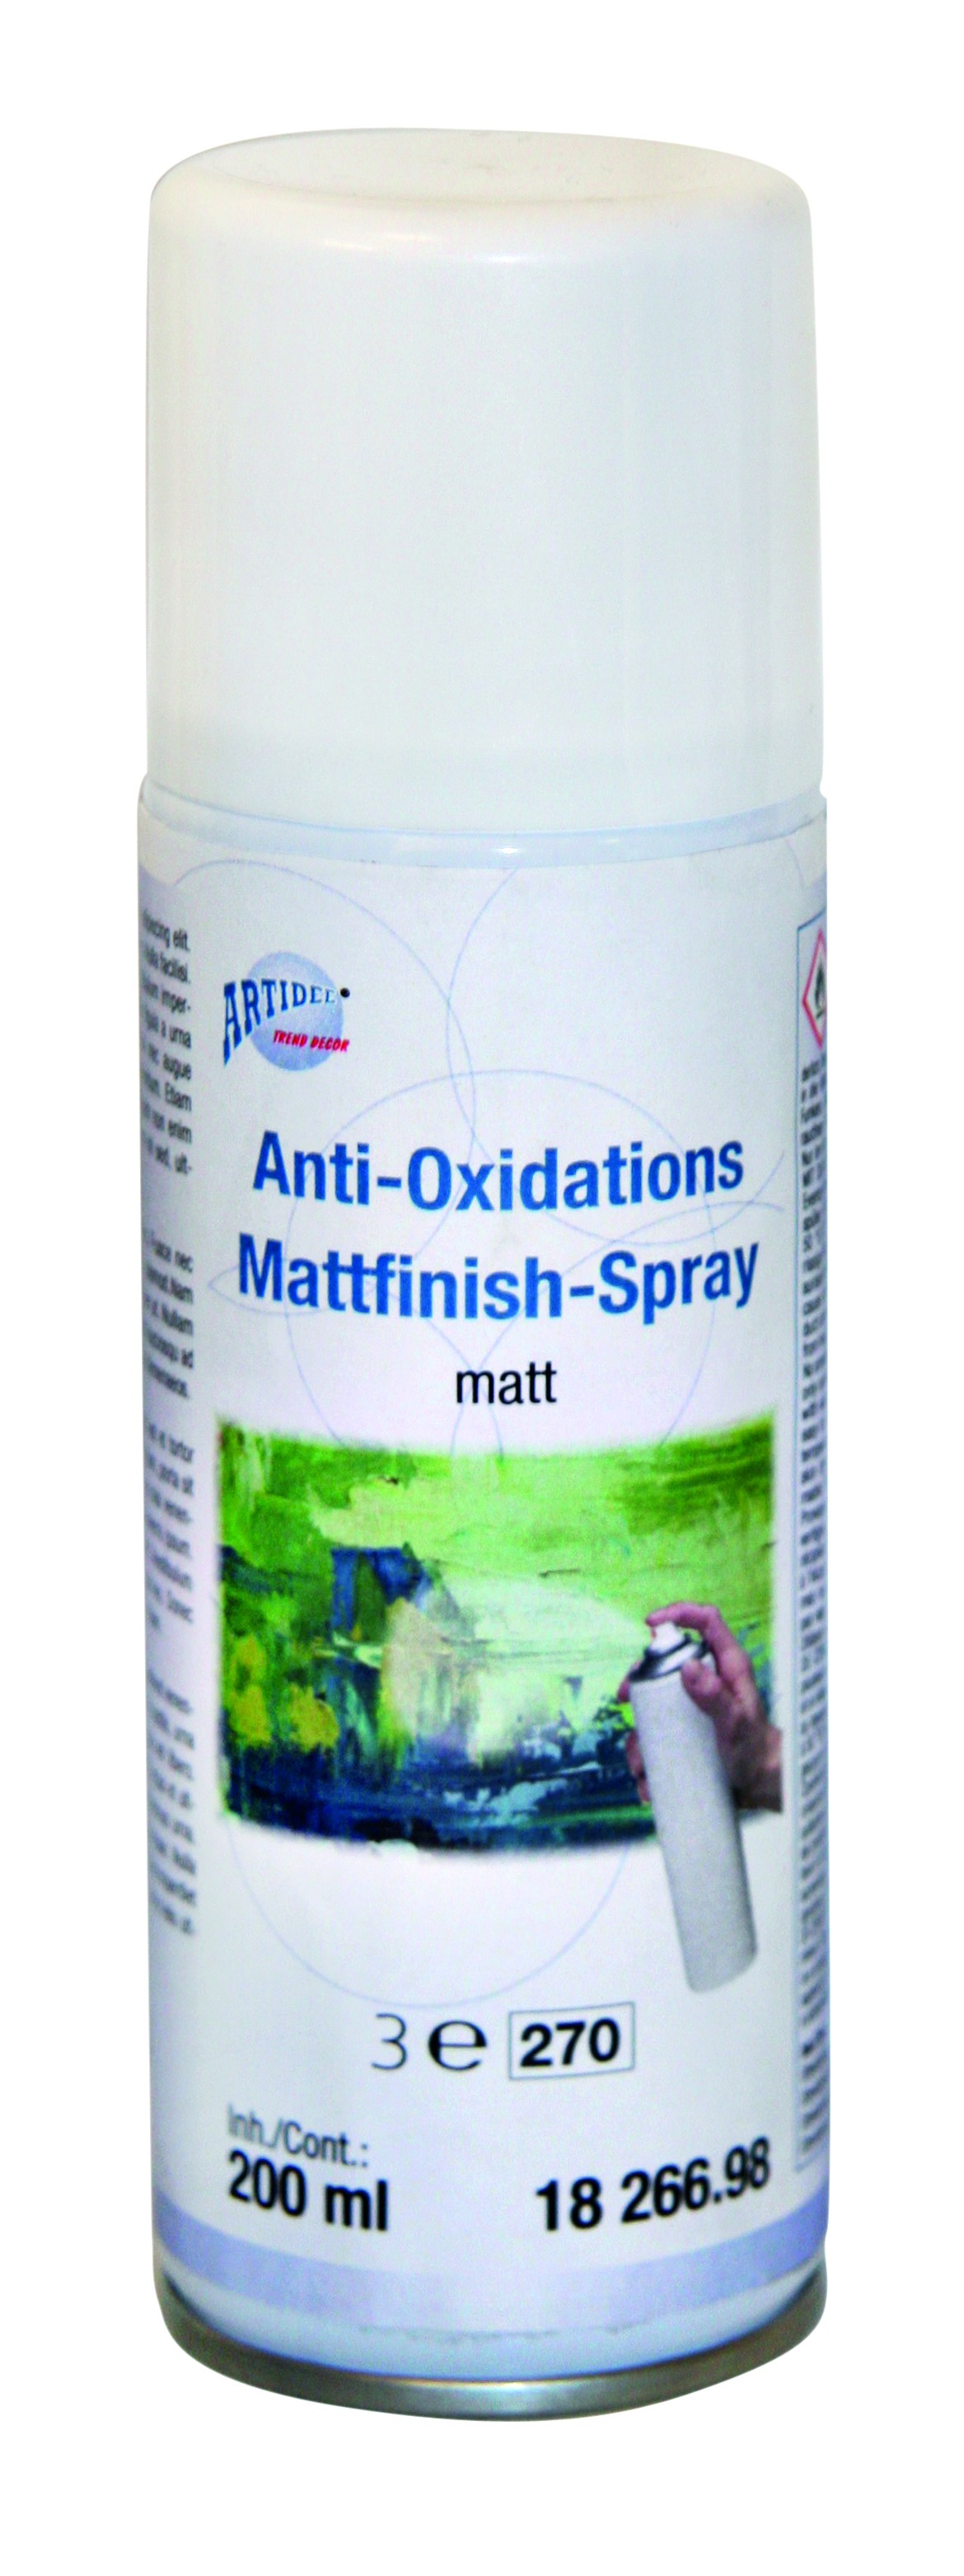 Anti-Oxidations-Mattfinish Spray, 200ml